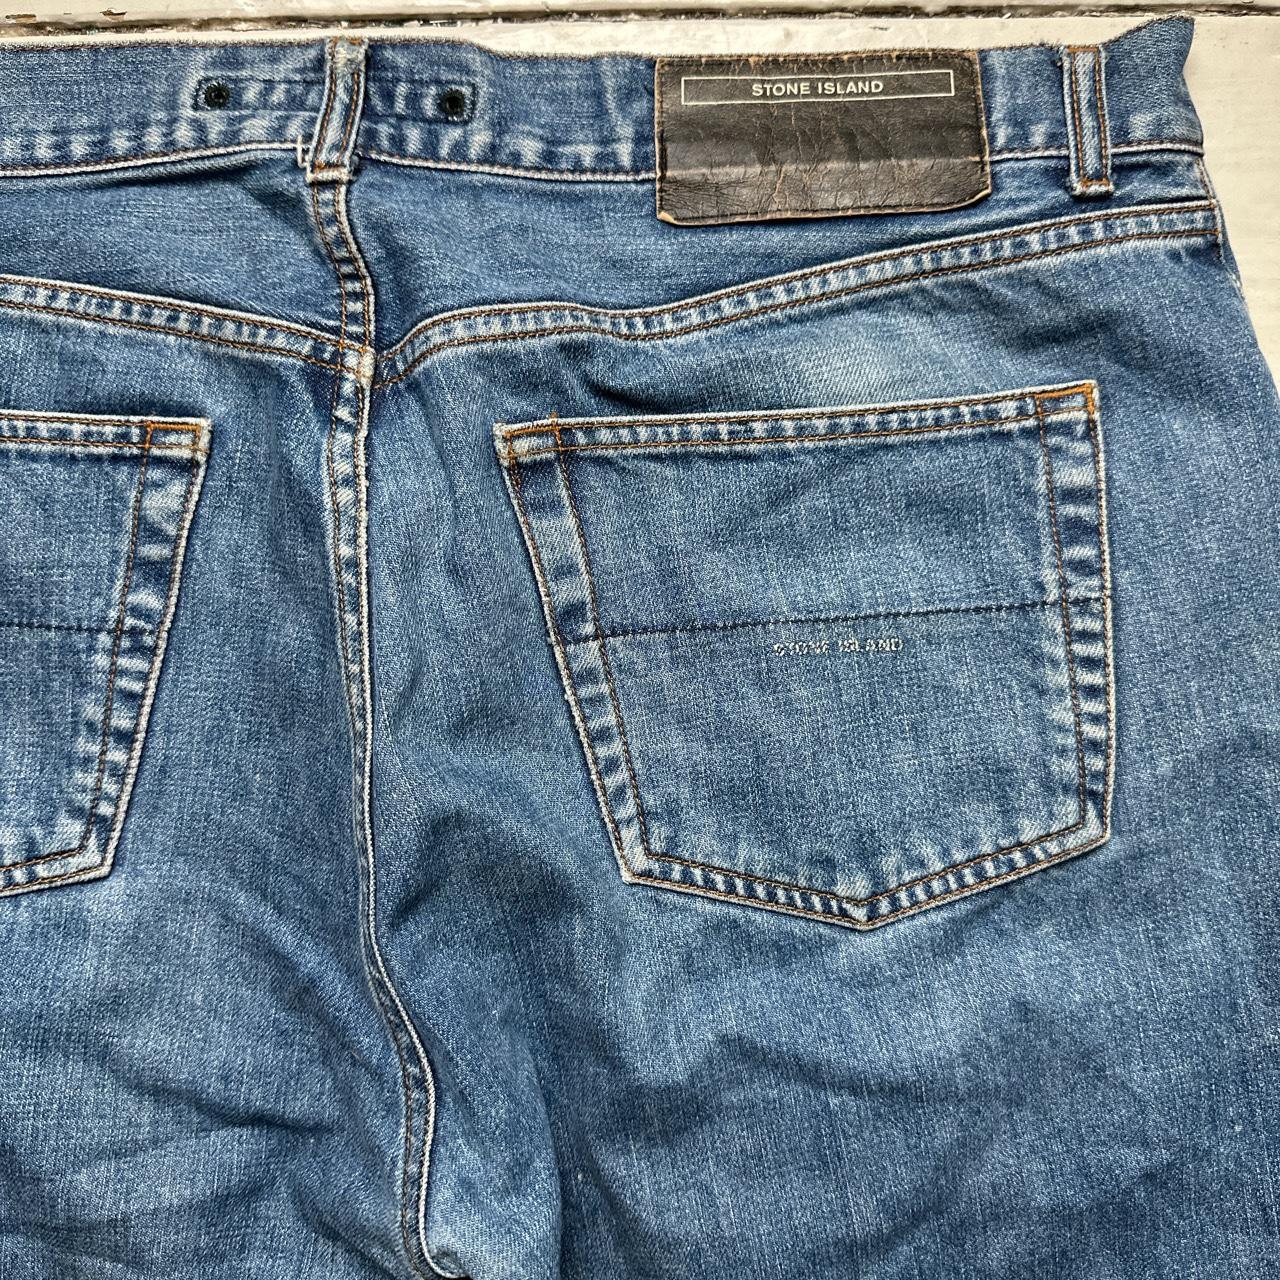 Stone Island Denims Vintage Jean Shorts Jorts Navy Blue